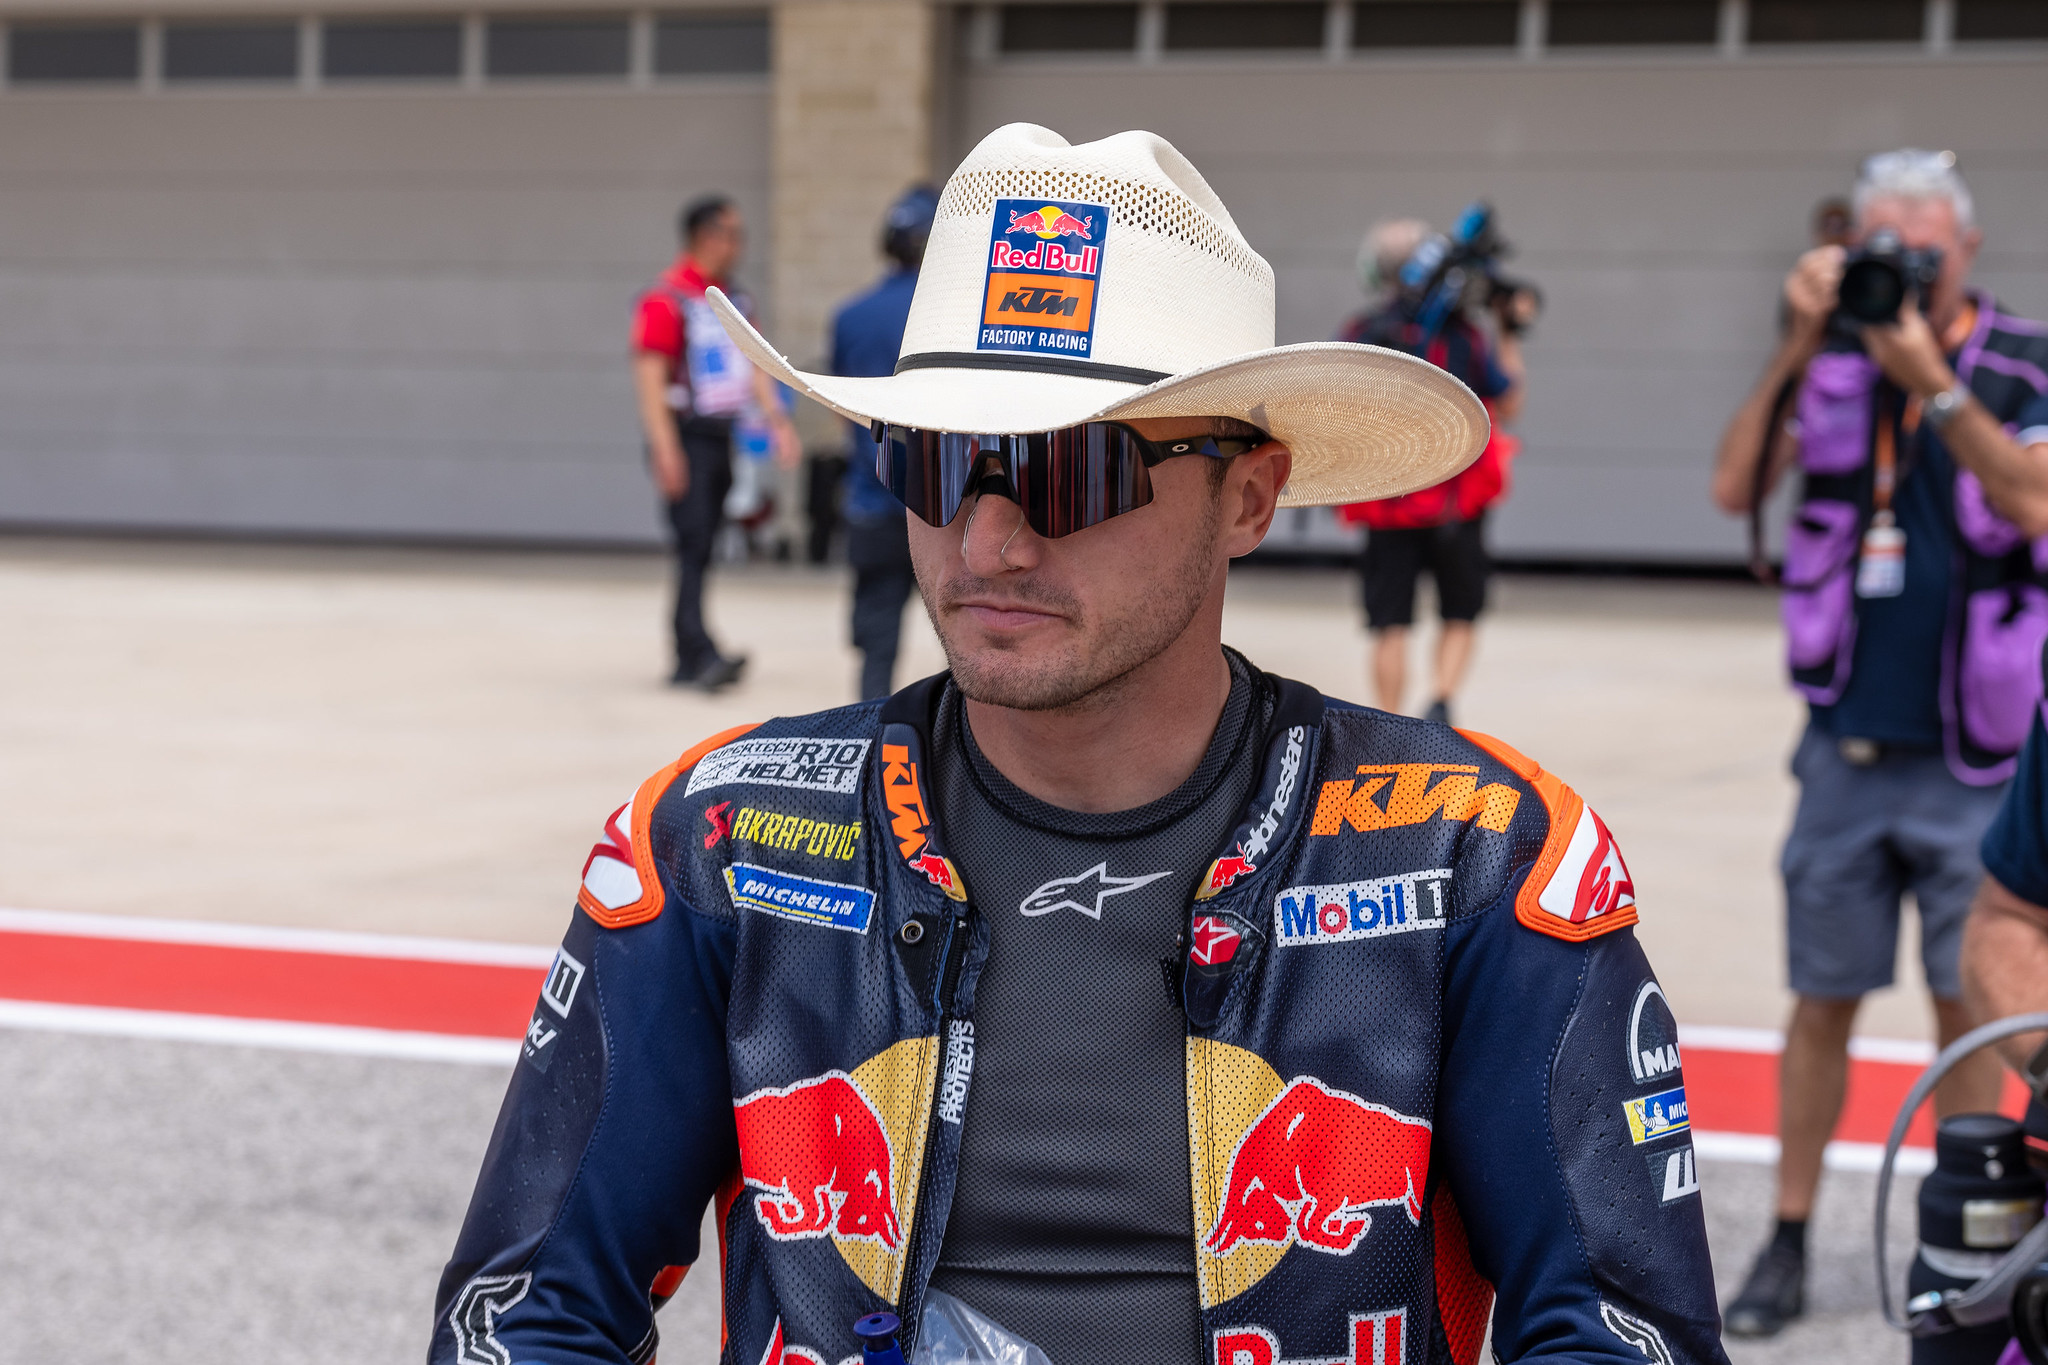 #43 Jack Miller - (AUS) - Red Bull KTM Factory Racing - KTM RC16